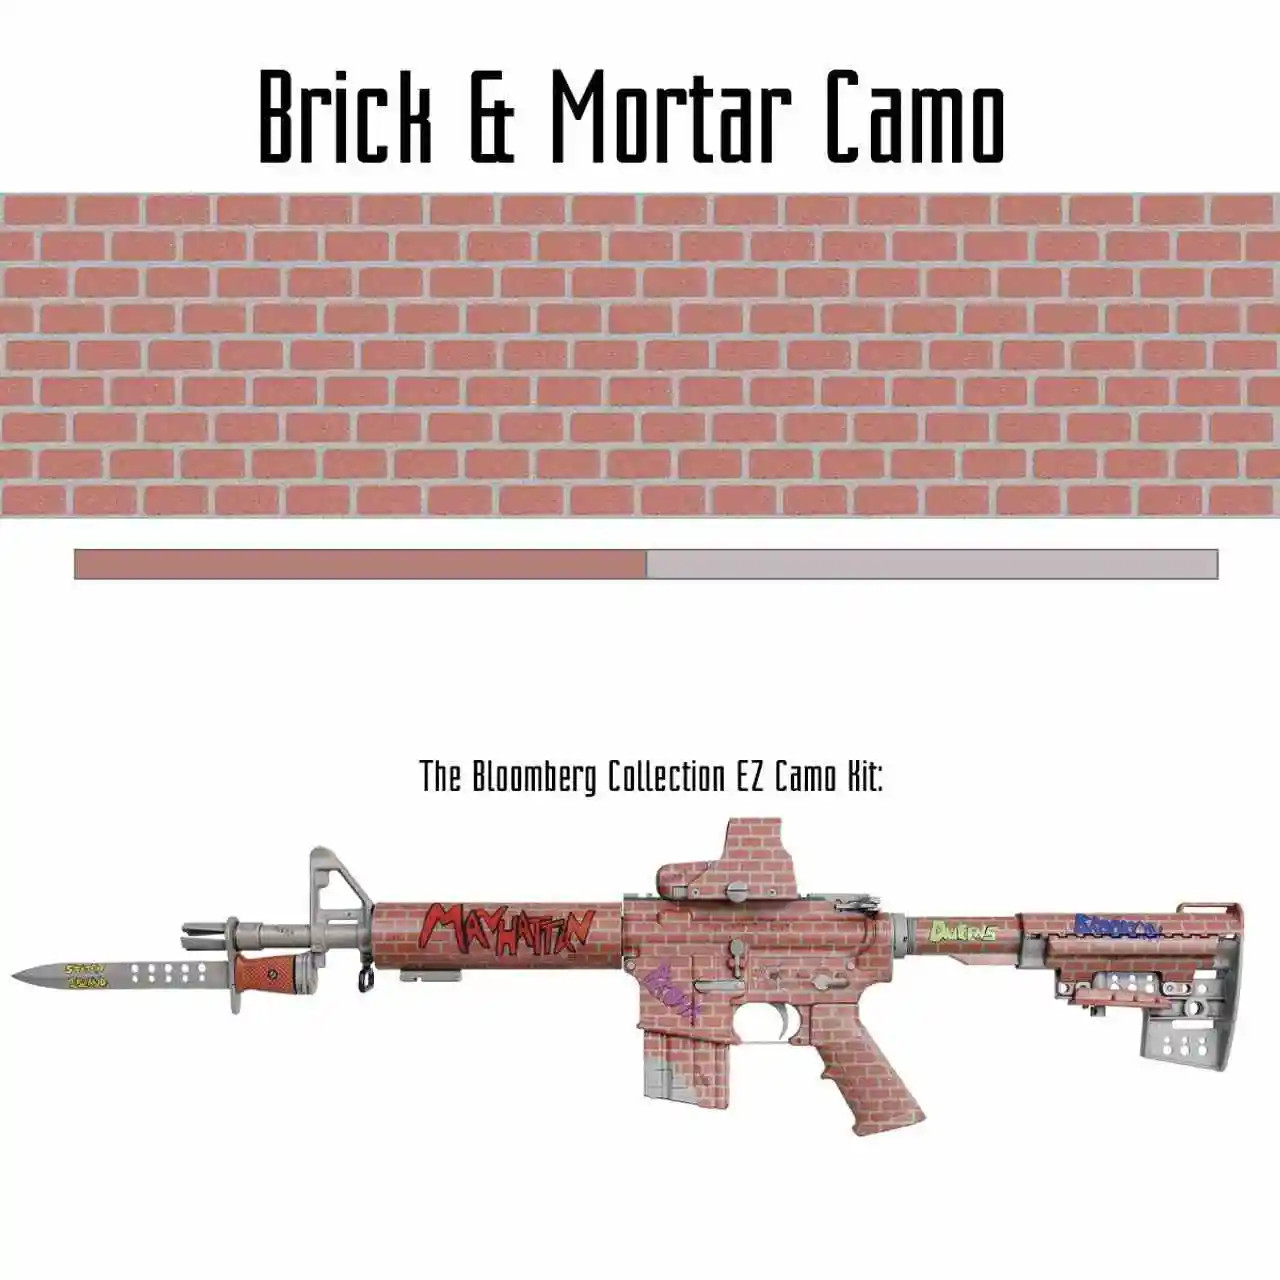 Brick & Mortar Camo Kits